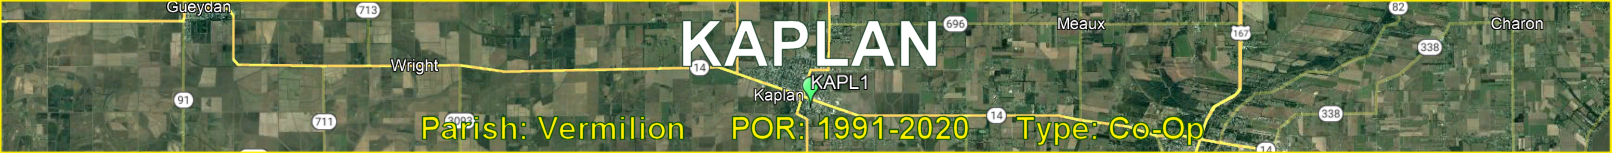 Title image for Kaplan